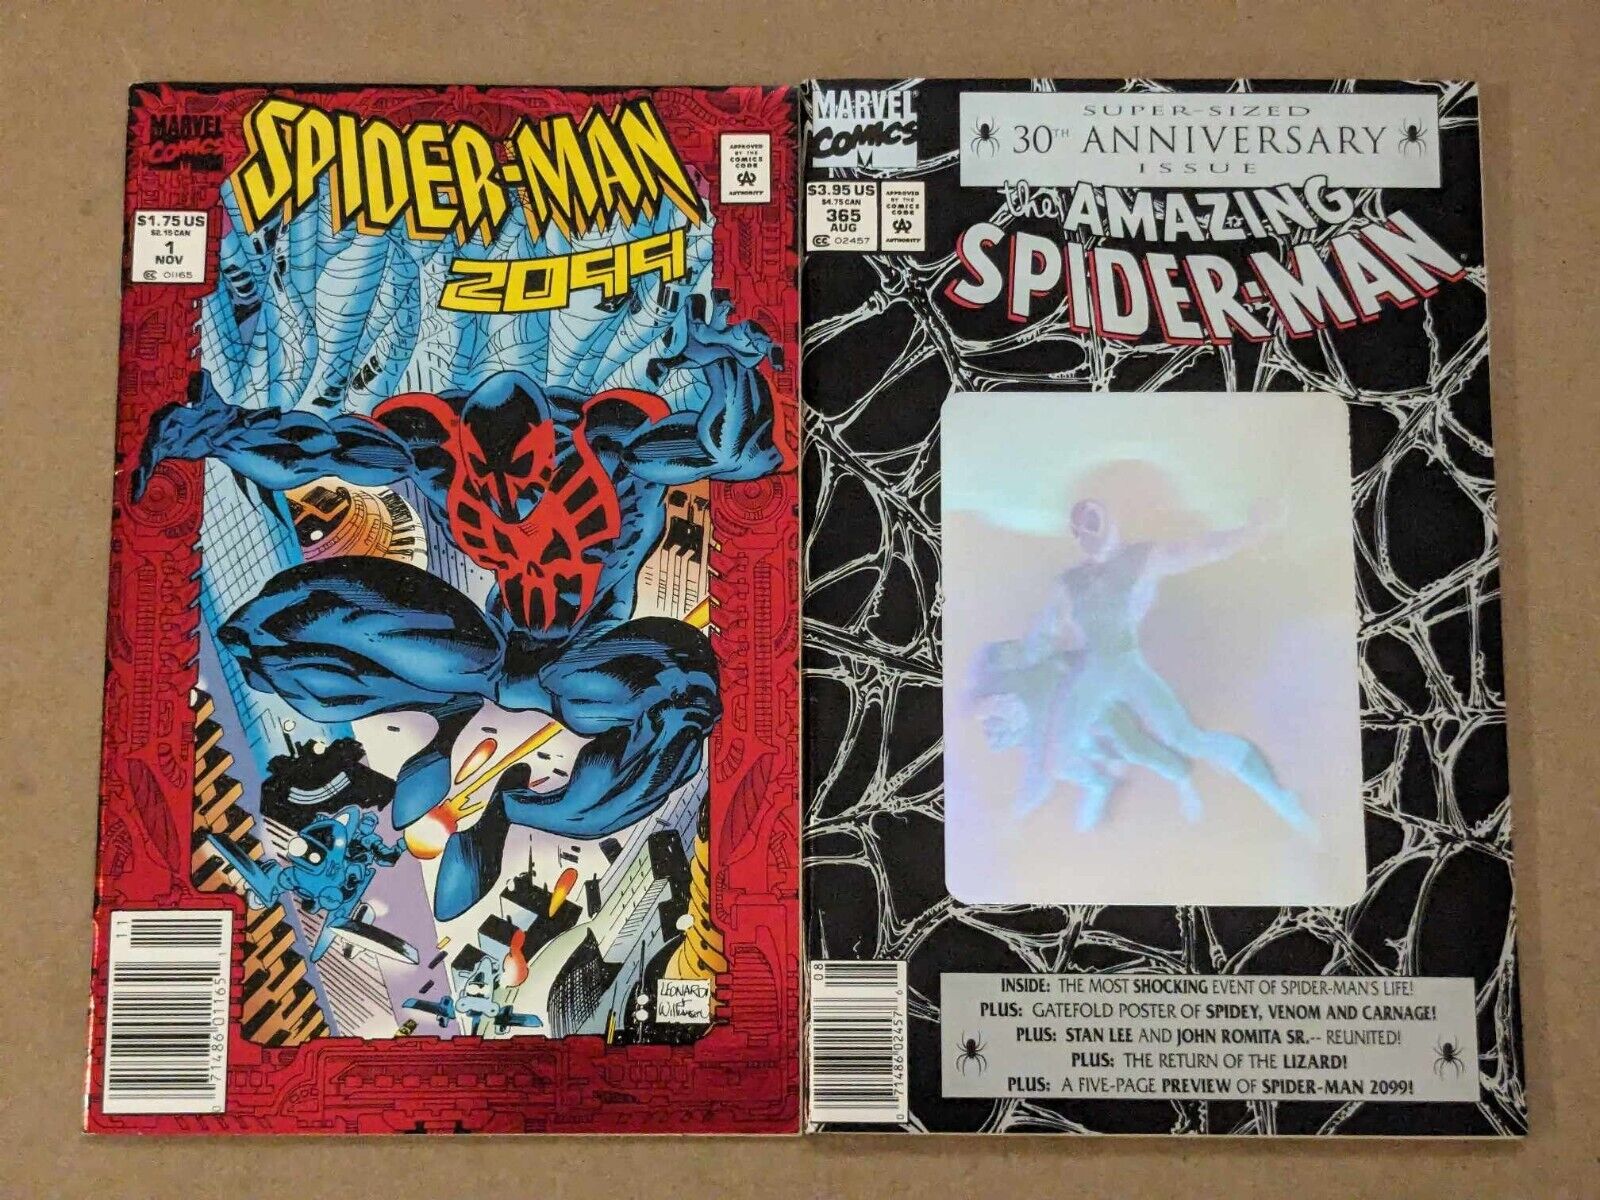 Spider-Man 2099 #1 Amazing Spider-Man #365 1st Appearnces of Spider-Man 2099